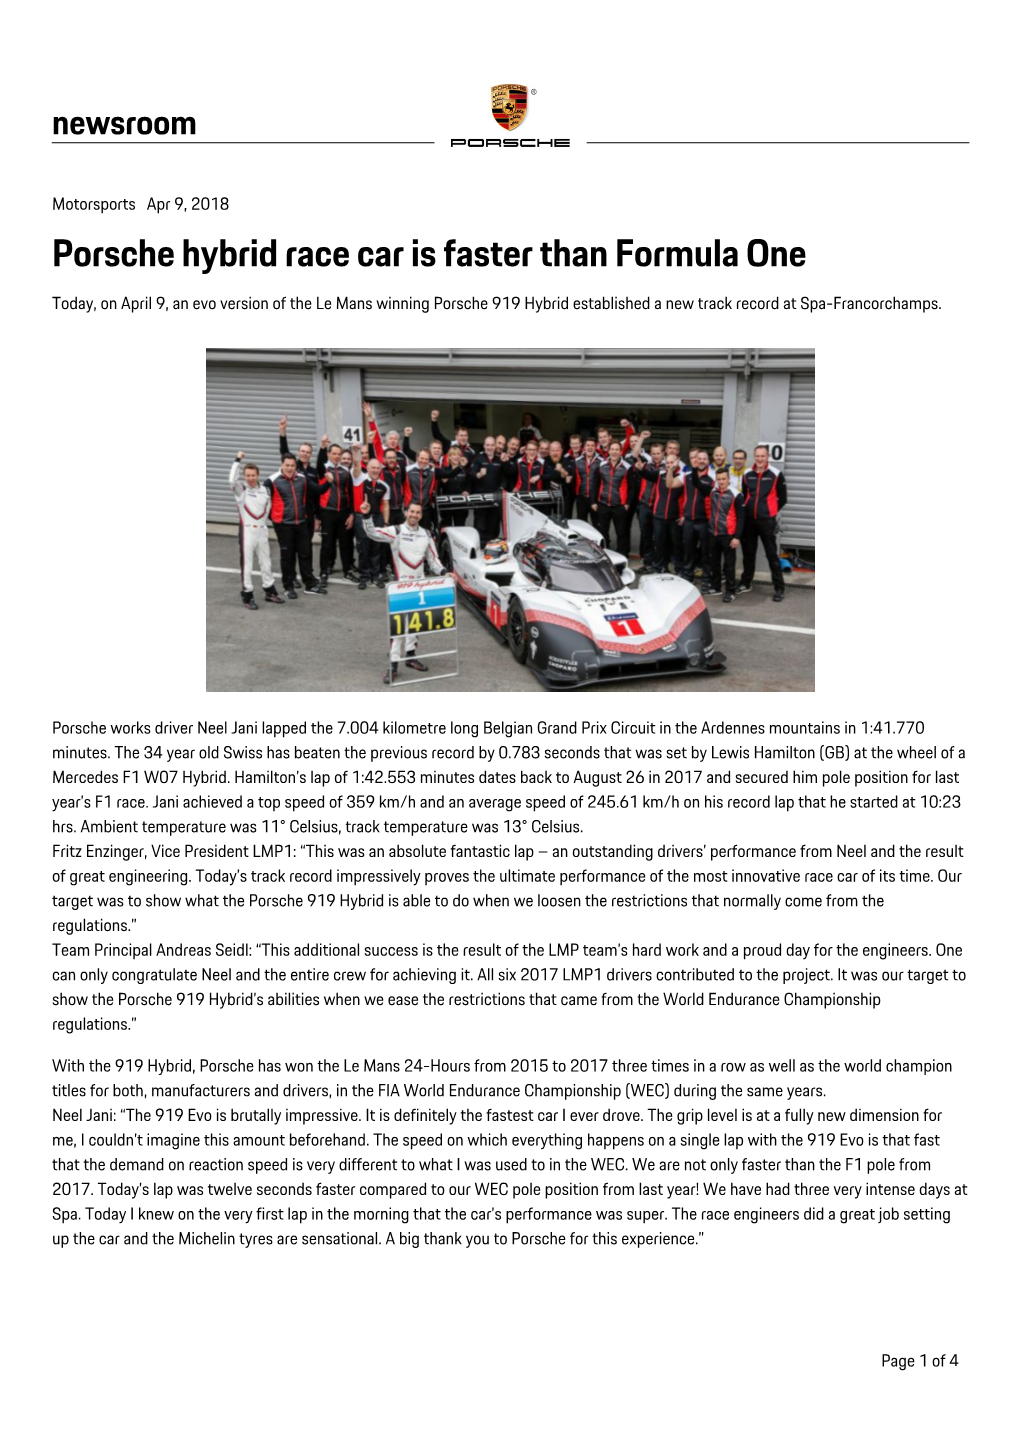 Porsche Hybrid Race Car Is Faster Than Formula